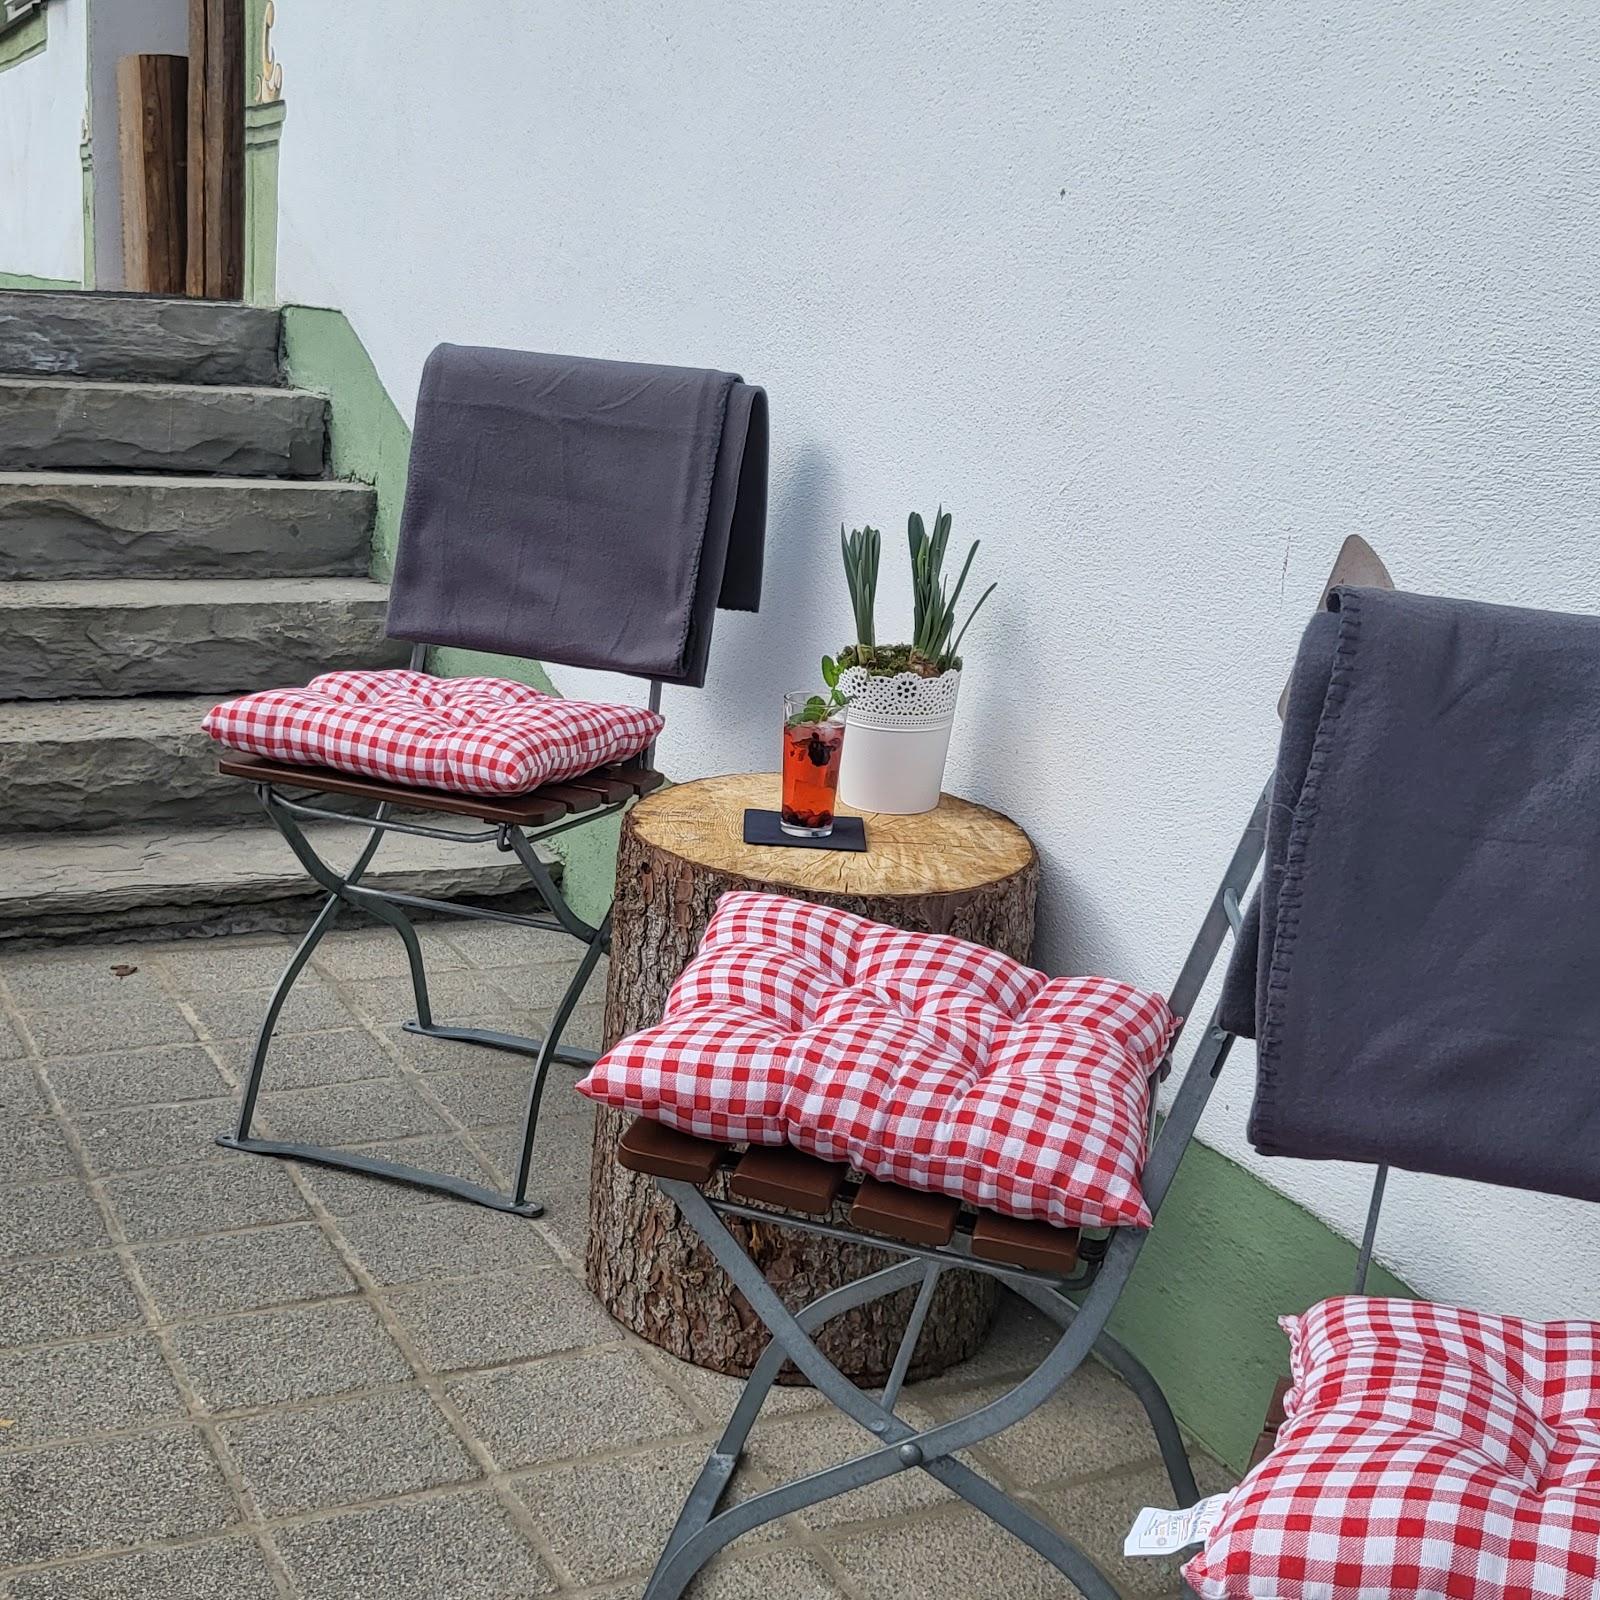 Restaurant "Café Migelig" in Lechbruck am See